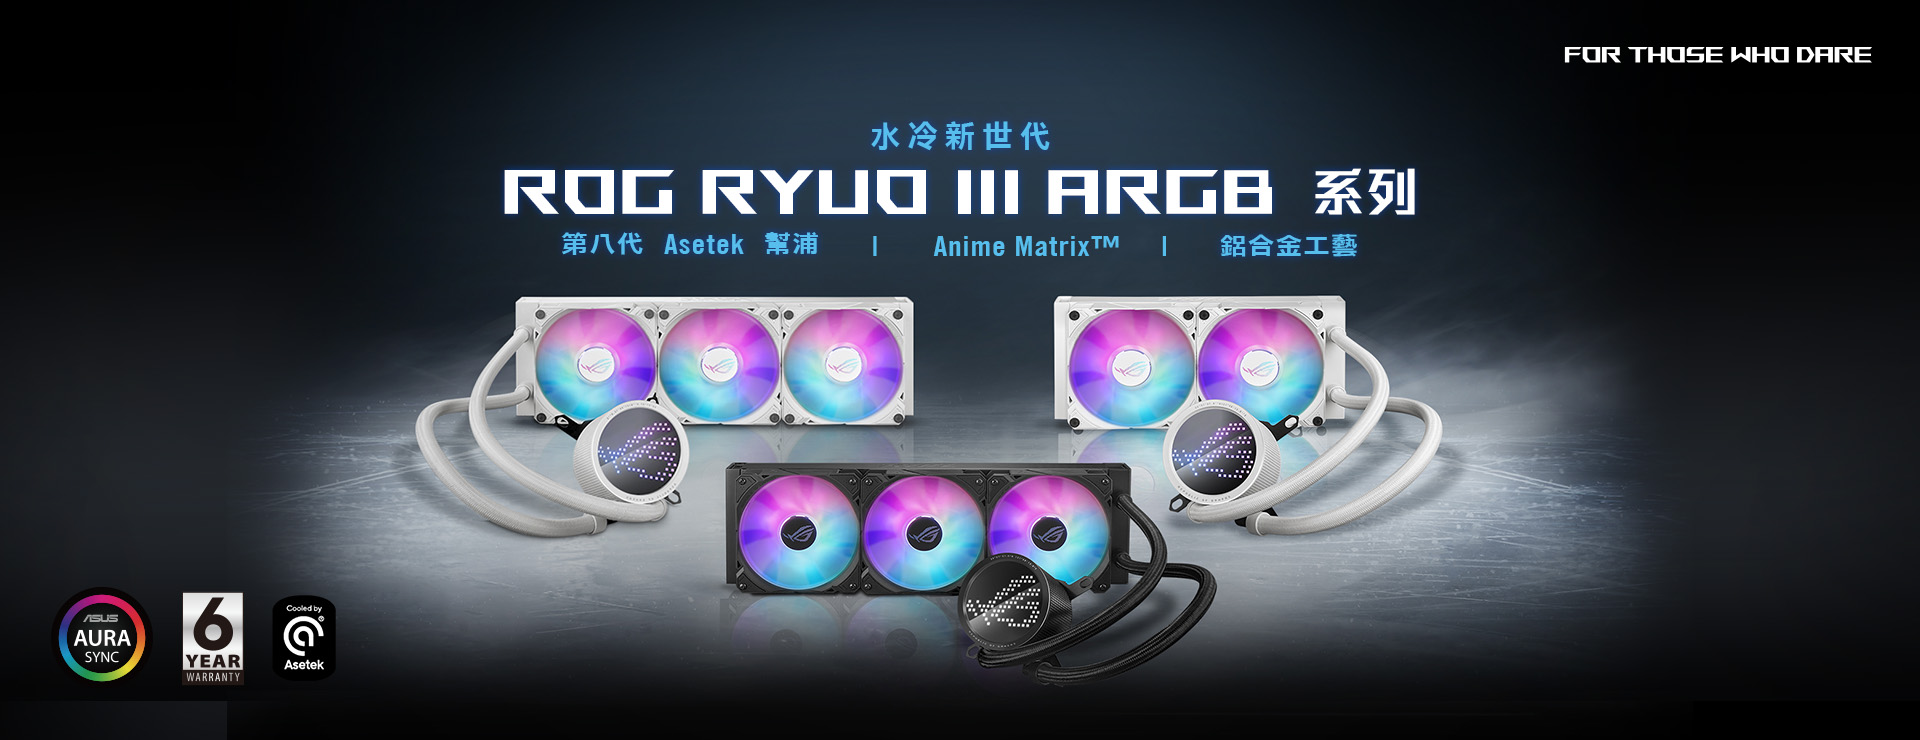 ROG Ryuo III 360 ARGB 橫幅